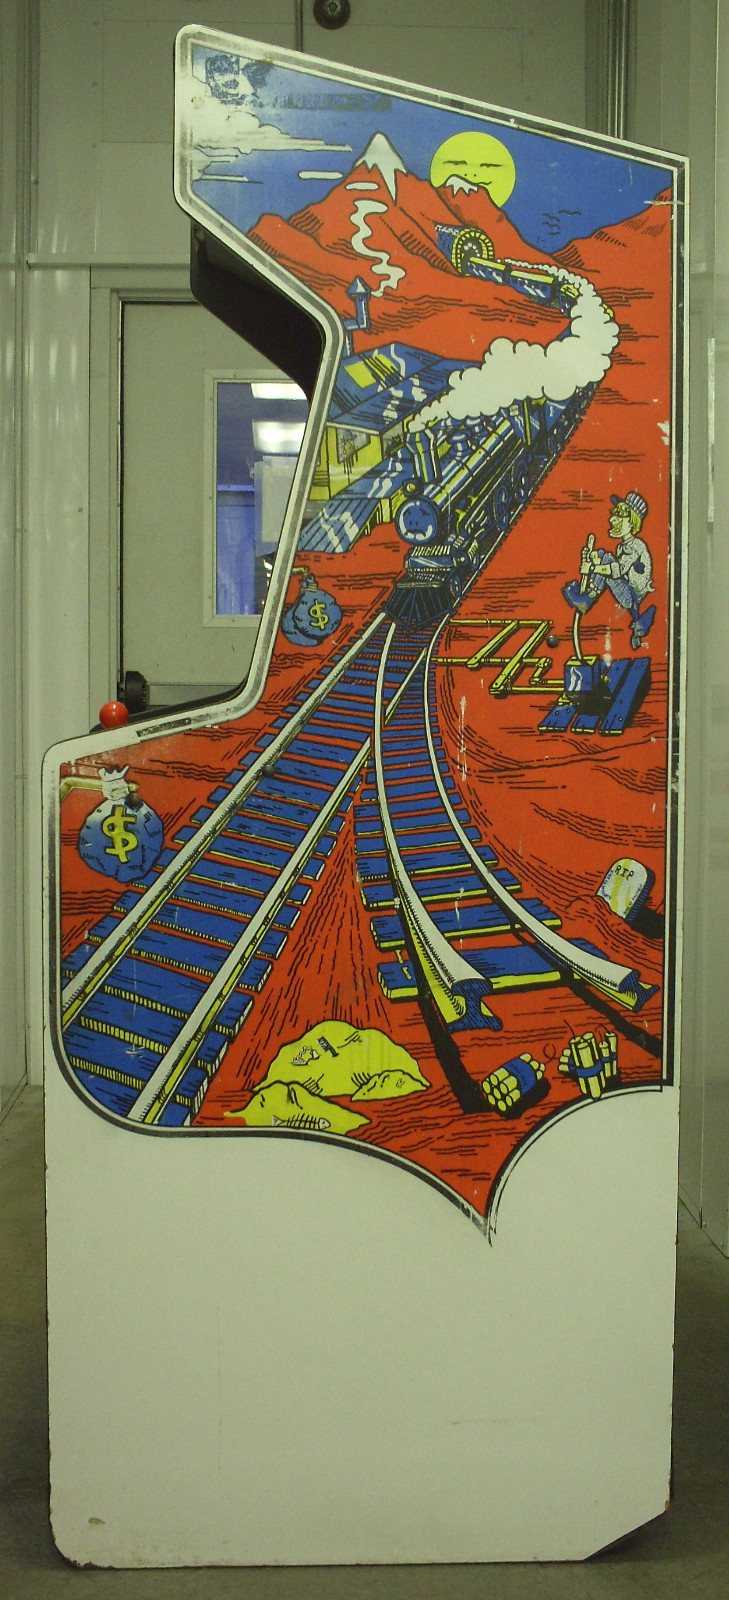 Railroad arcade game - Illustrated artwork - Photo 1